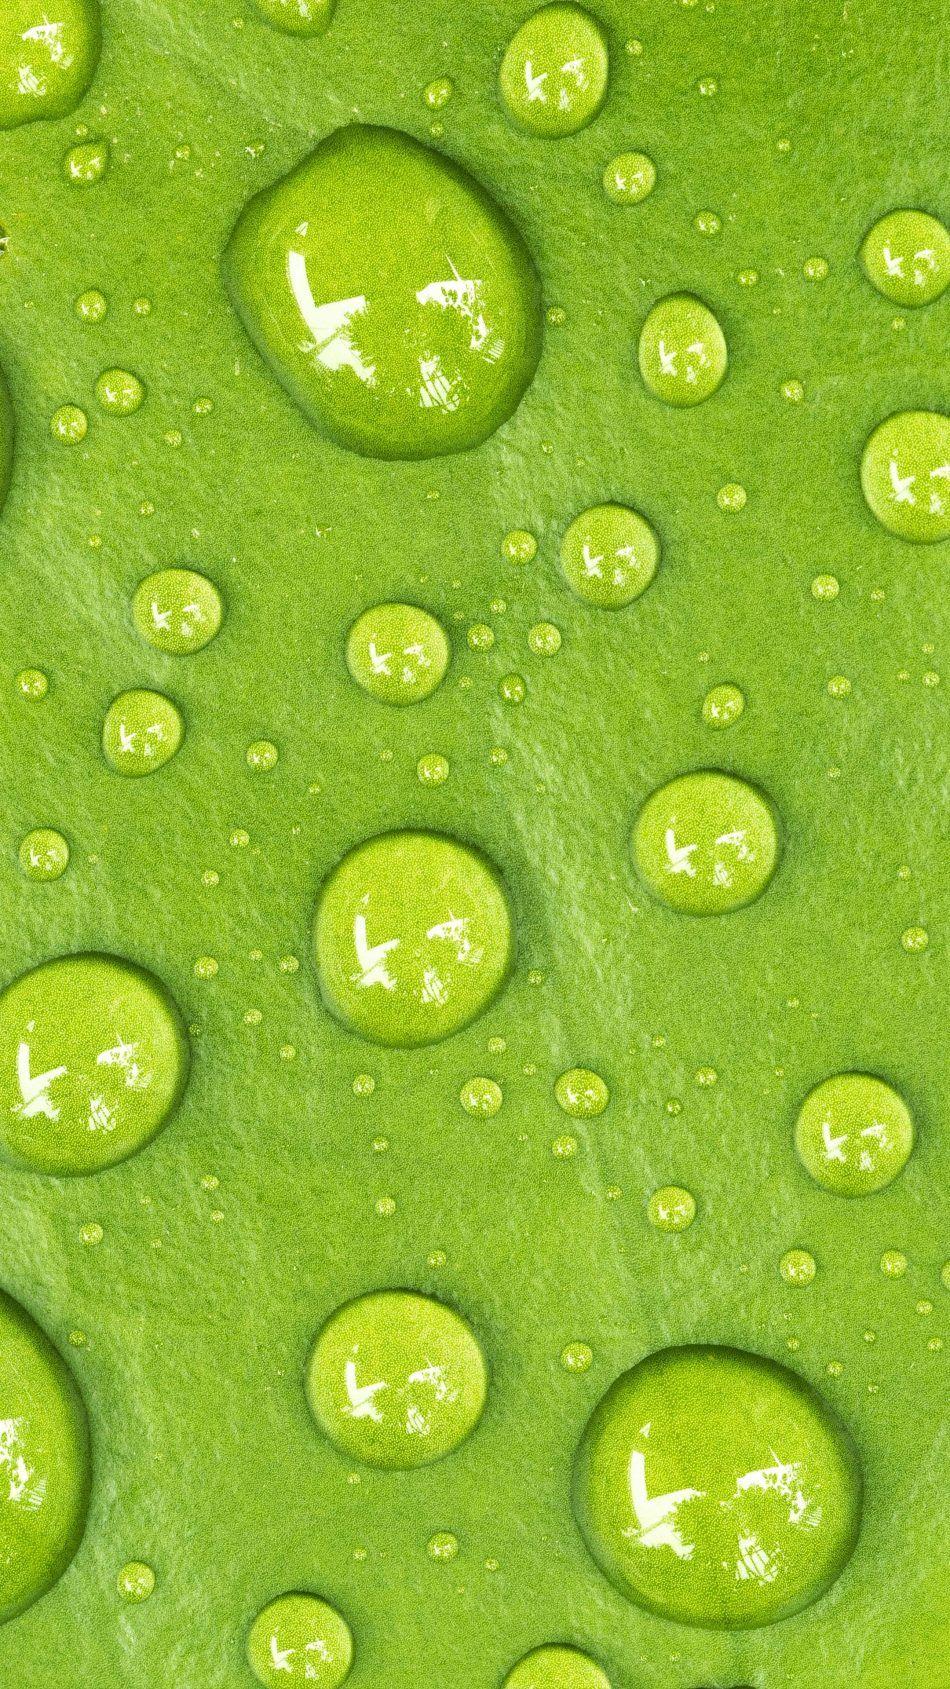 Water Drop Green Macro 4K Ultra HD Mobile Wallpaper. Green leaf wallpaper, Leaf wallpaper, Wallpaper